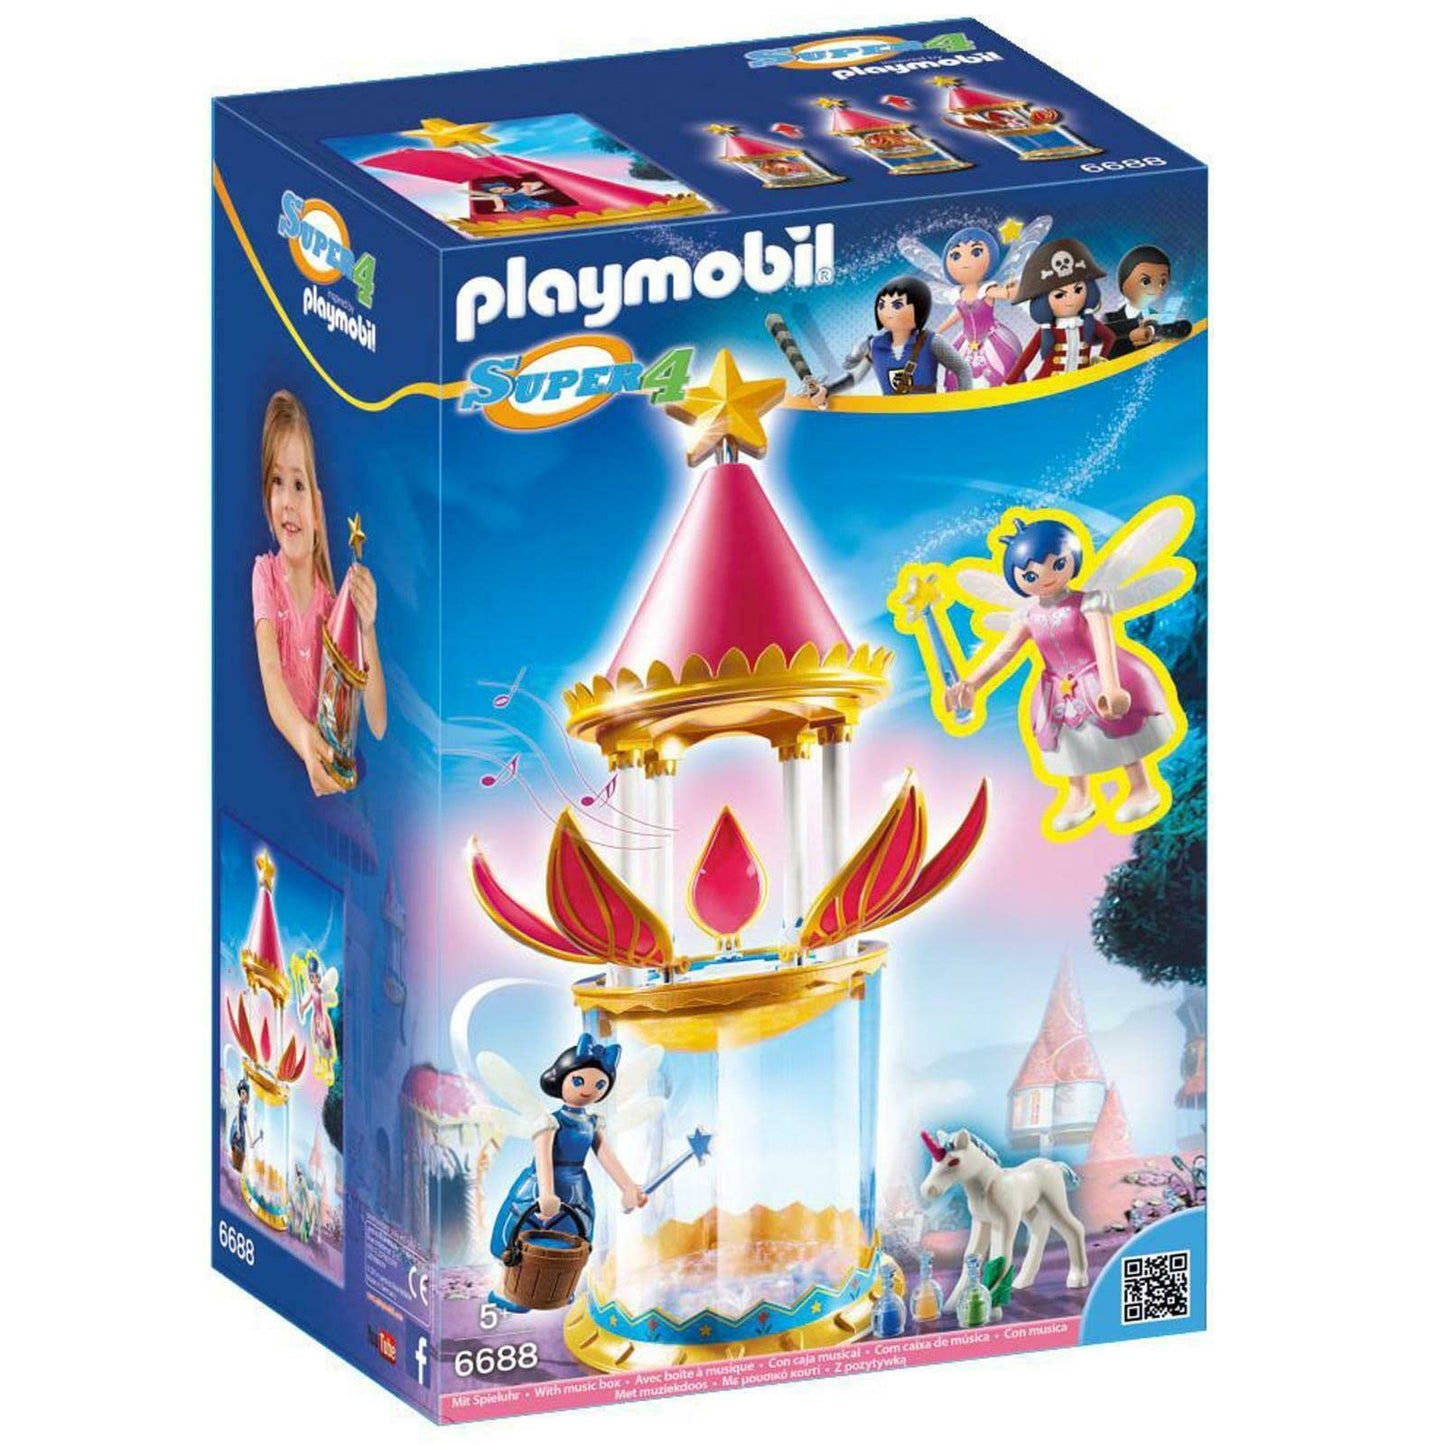 Playmobil - Super 4